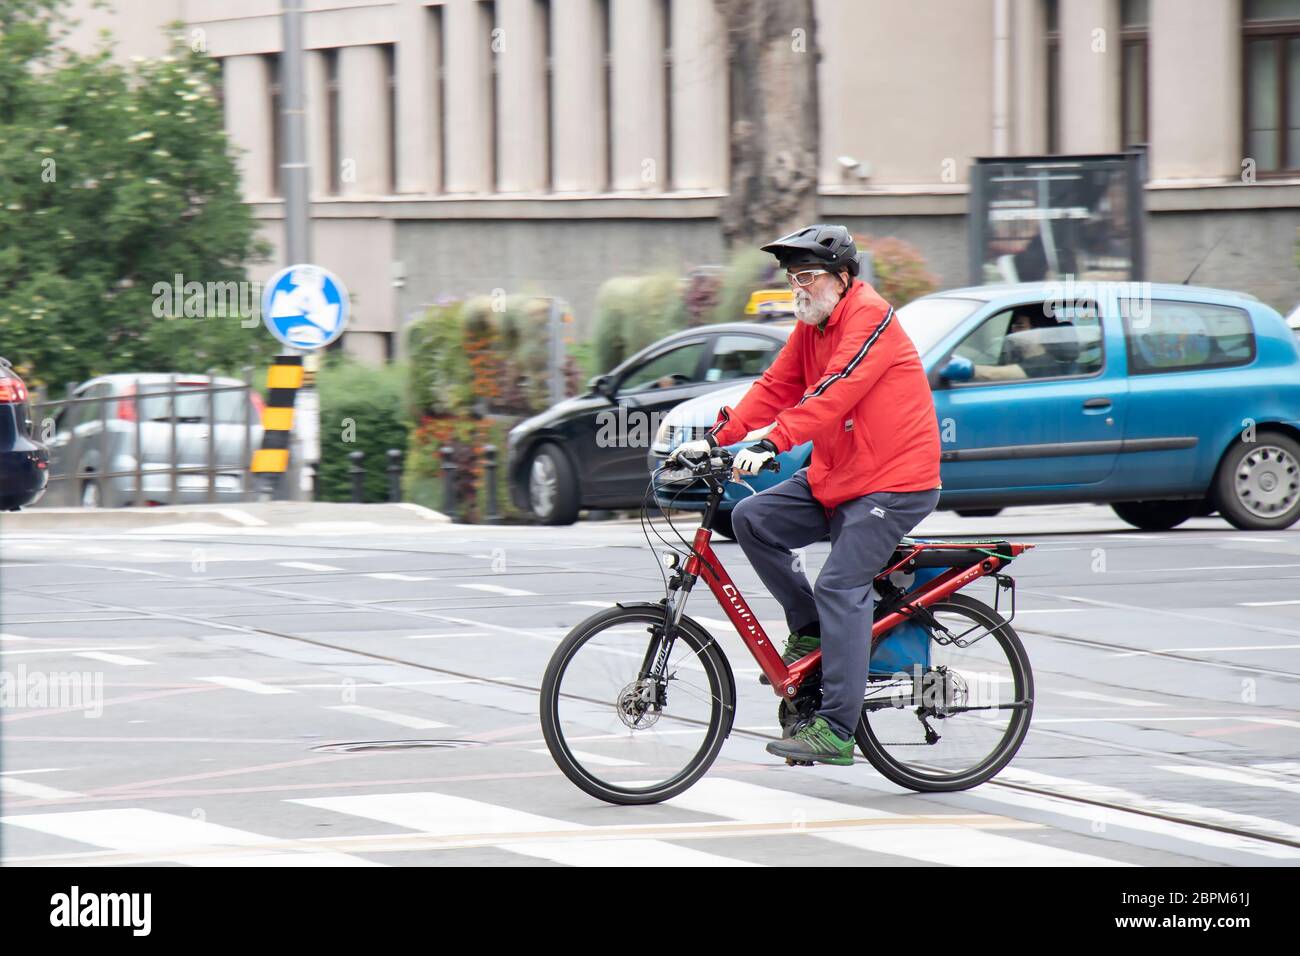 Belgrade, Serbia - May 15, 2020: Elder man with gray beard riding a red bike in city street traffic Stock Photo